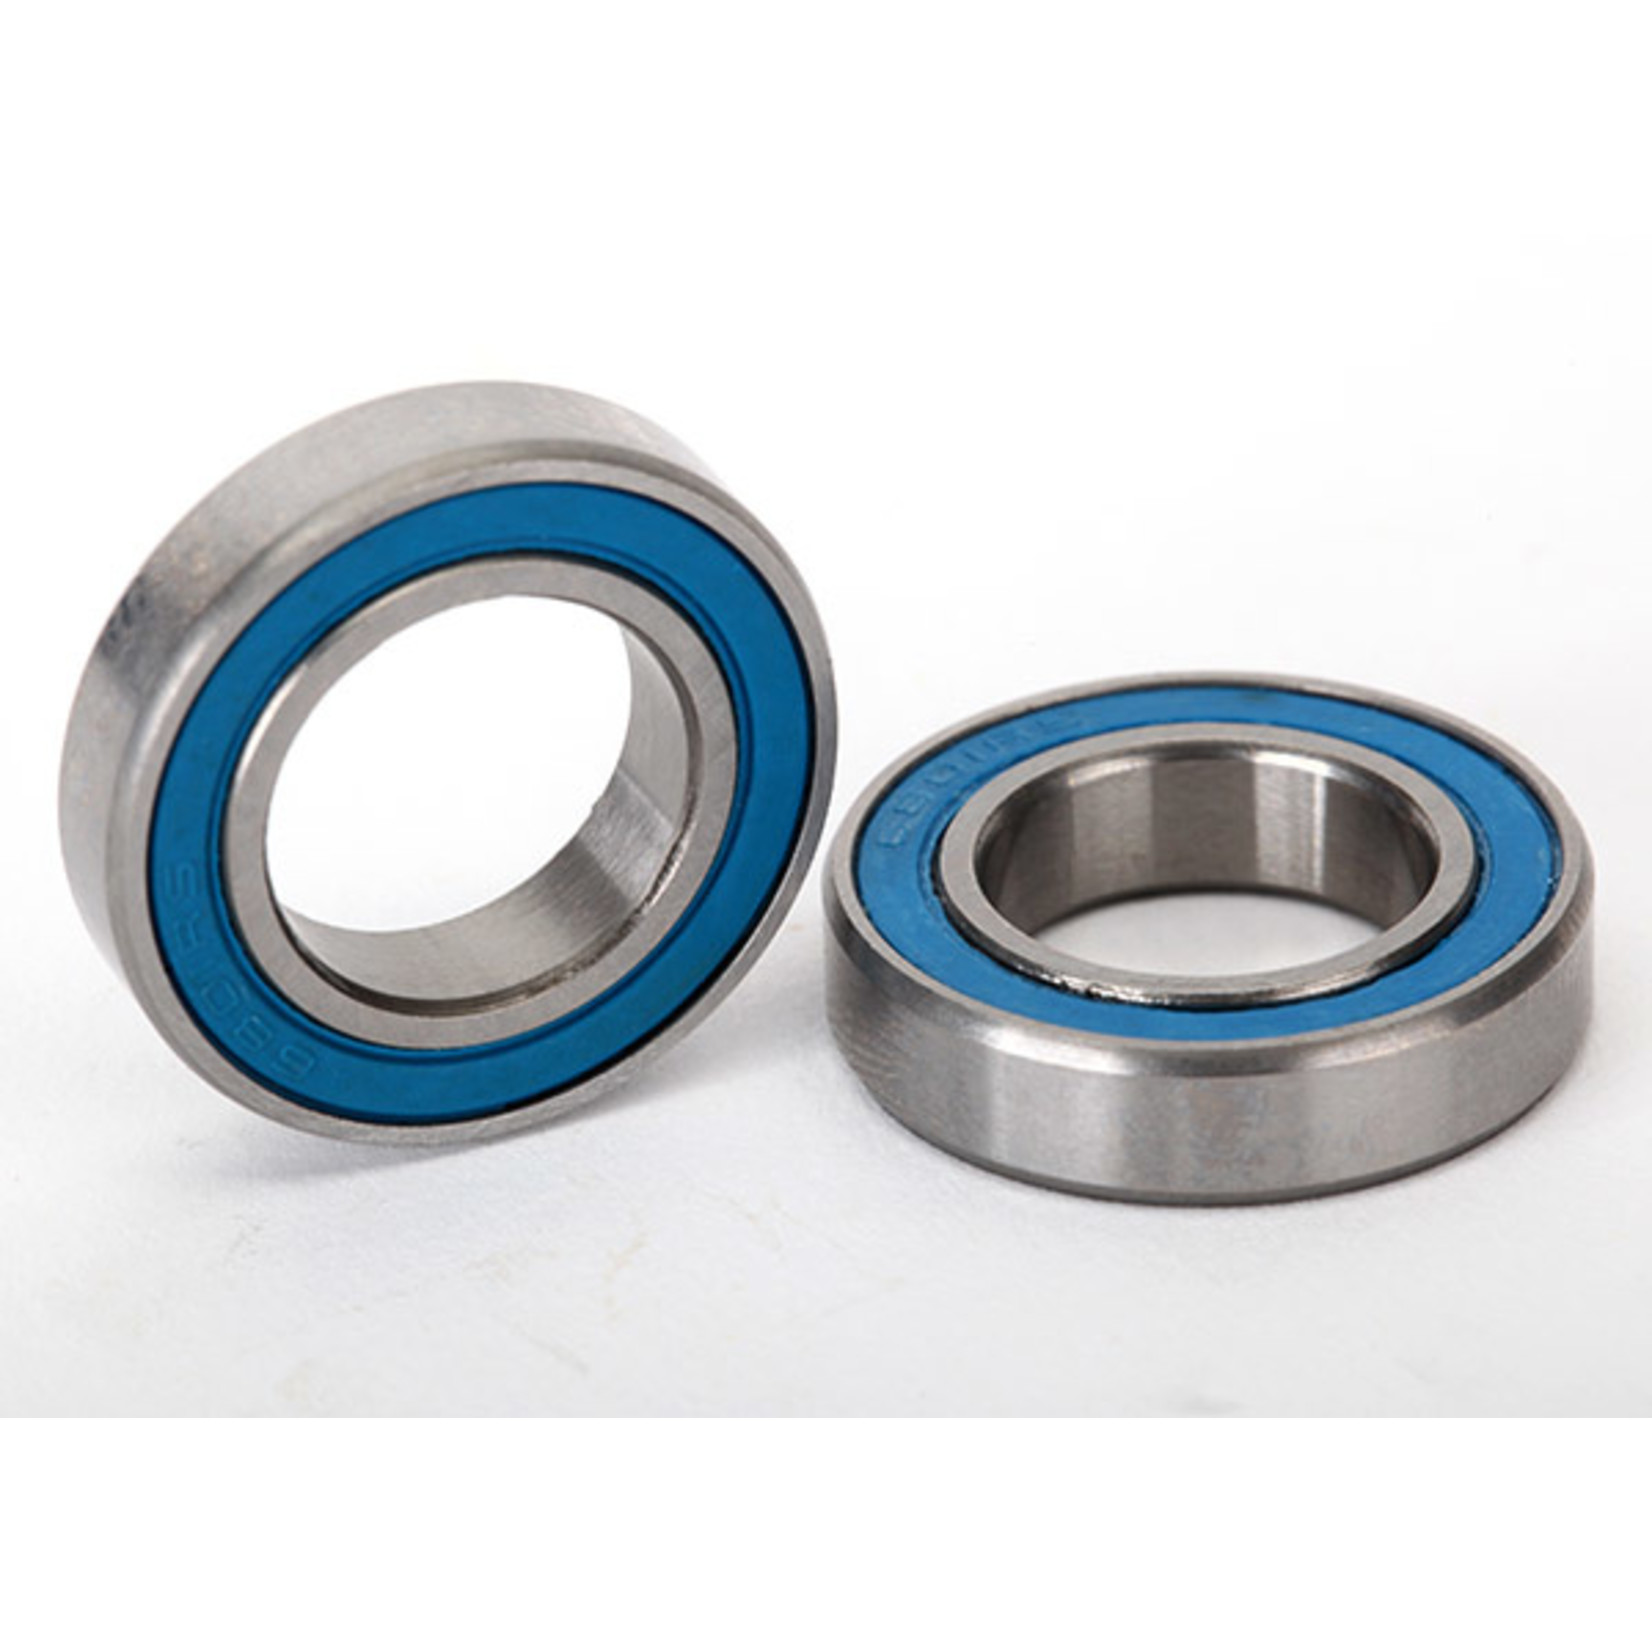 Traxxas 5101 - Ball bearings, blue rubber sealed (12x21x5m